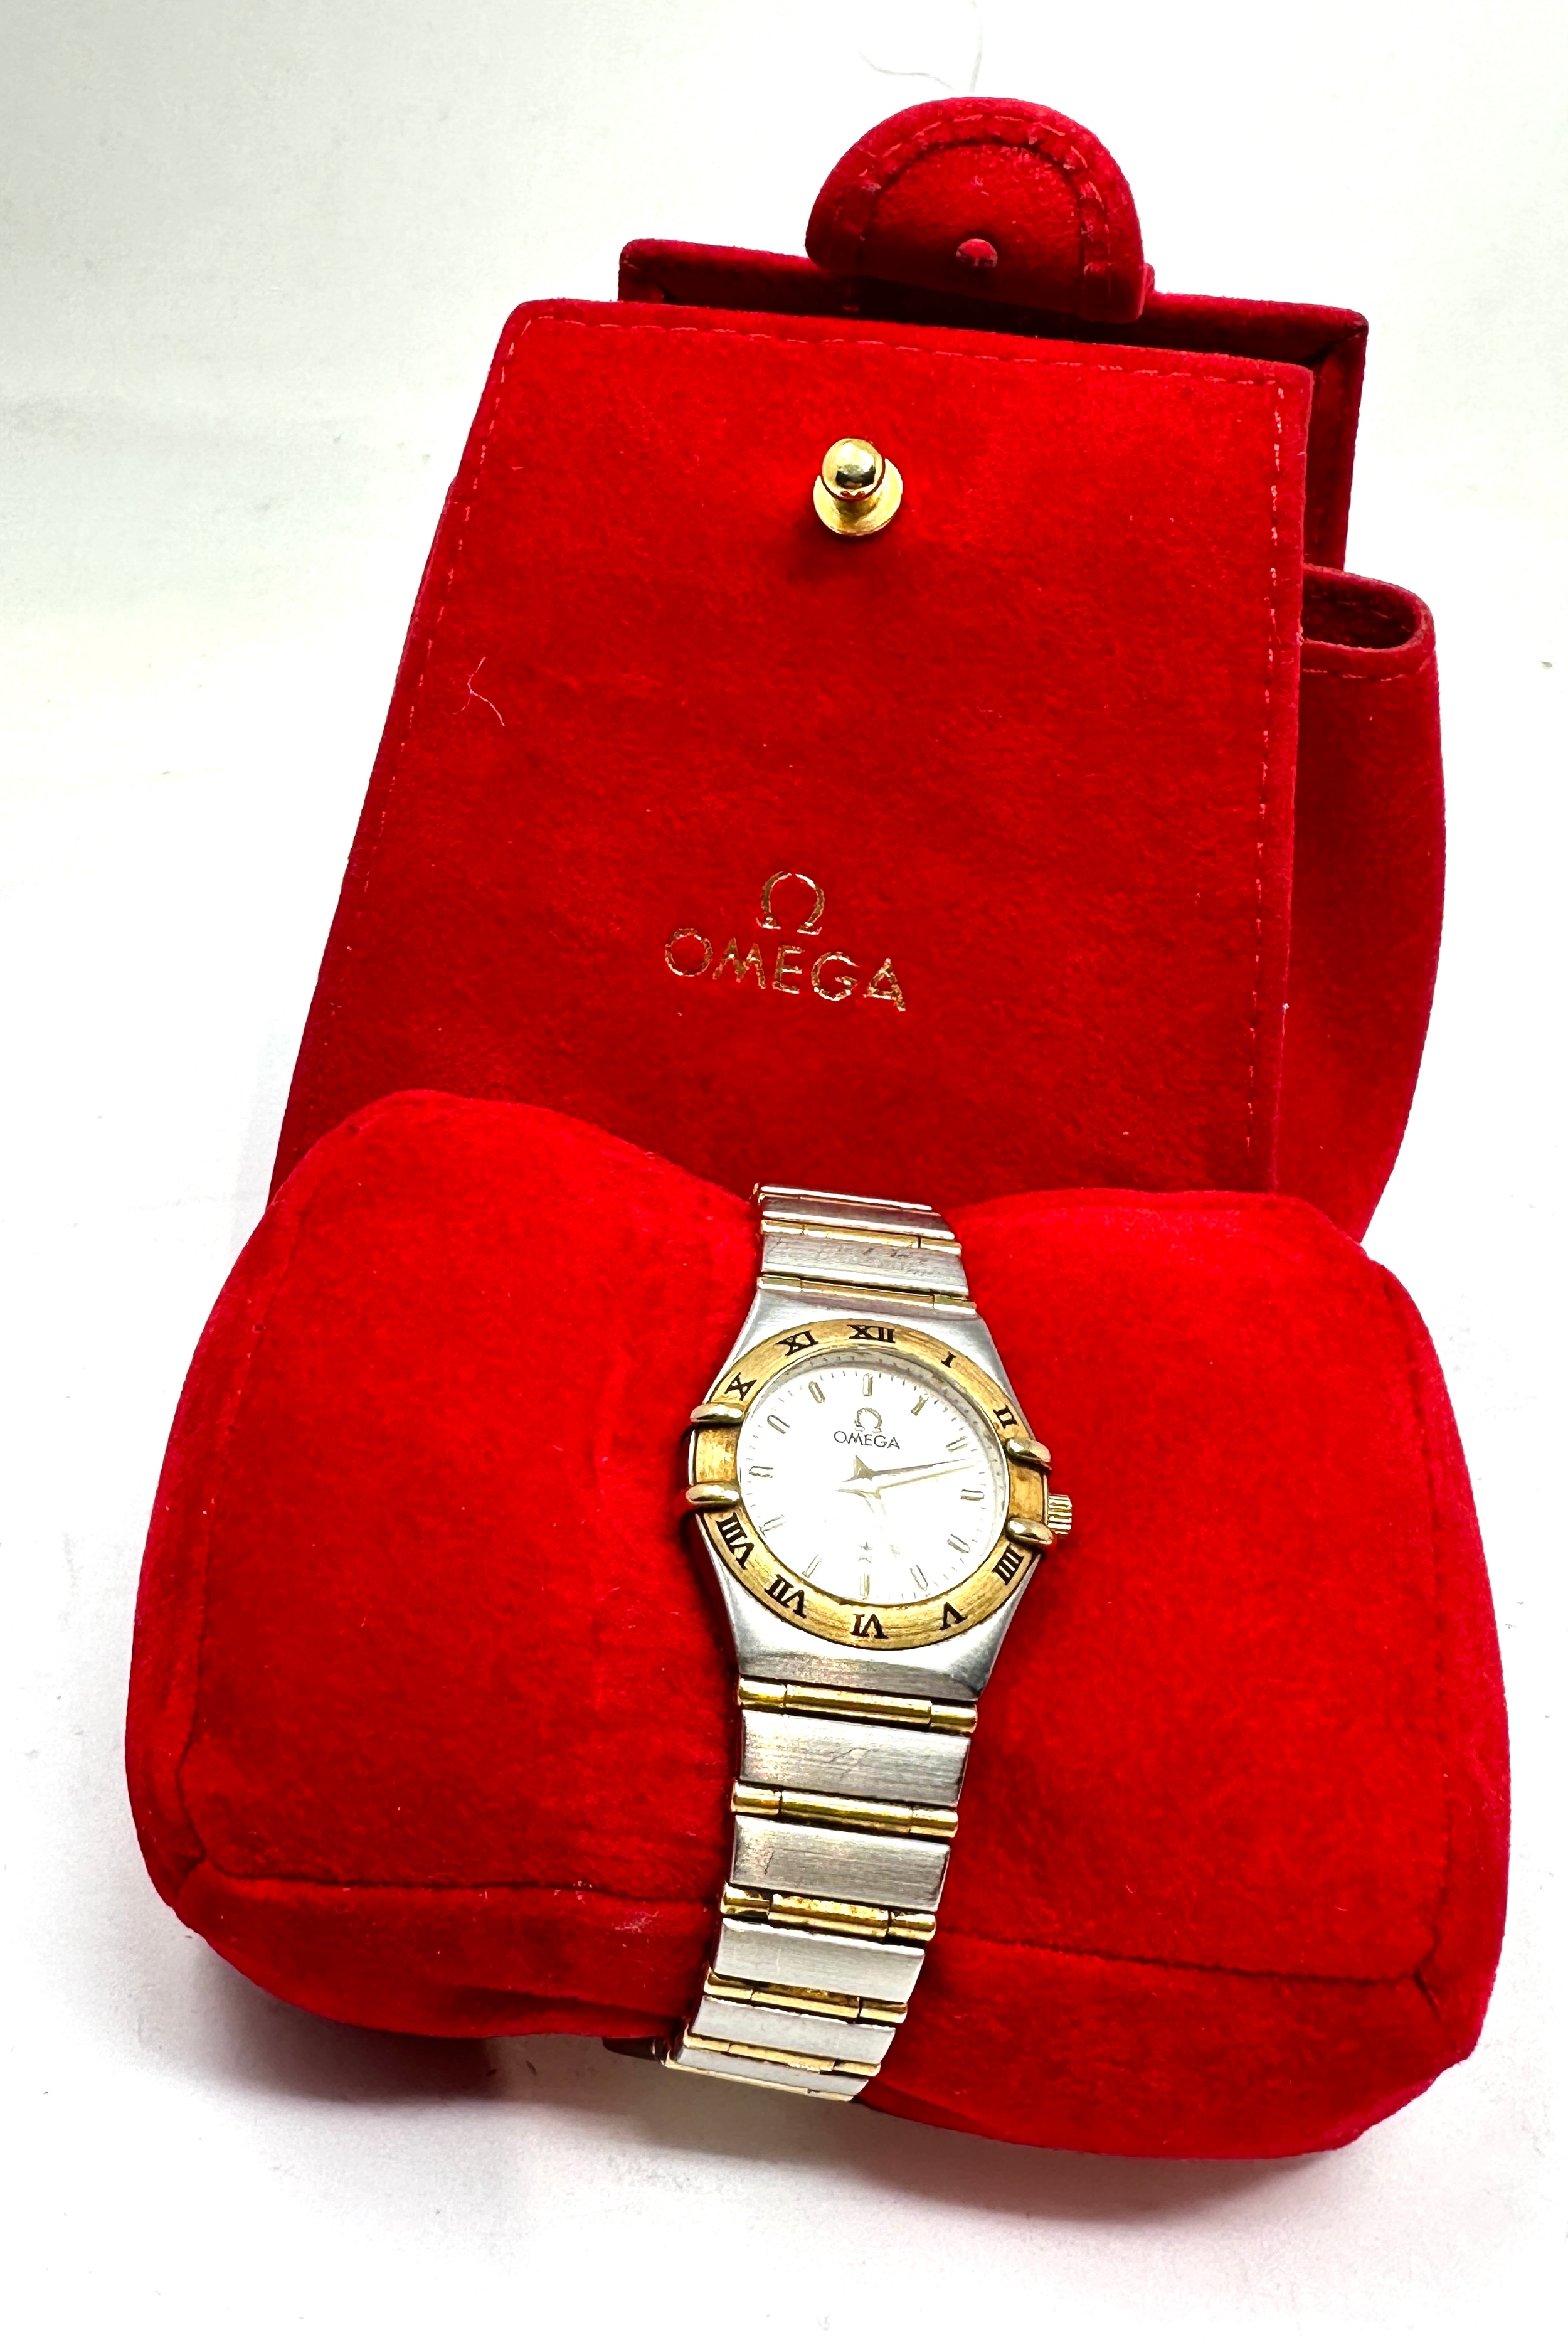 Omega constellation ladies WristWatch 18k/SS Quartz movement the watch is ticking original bag & 3